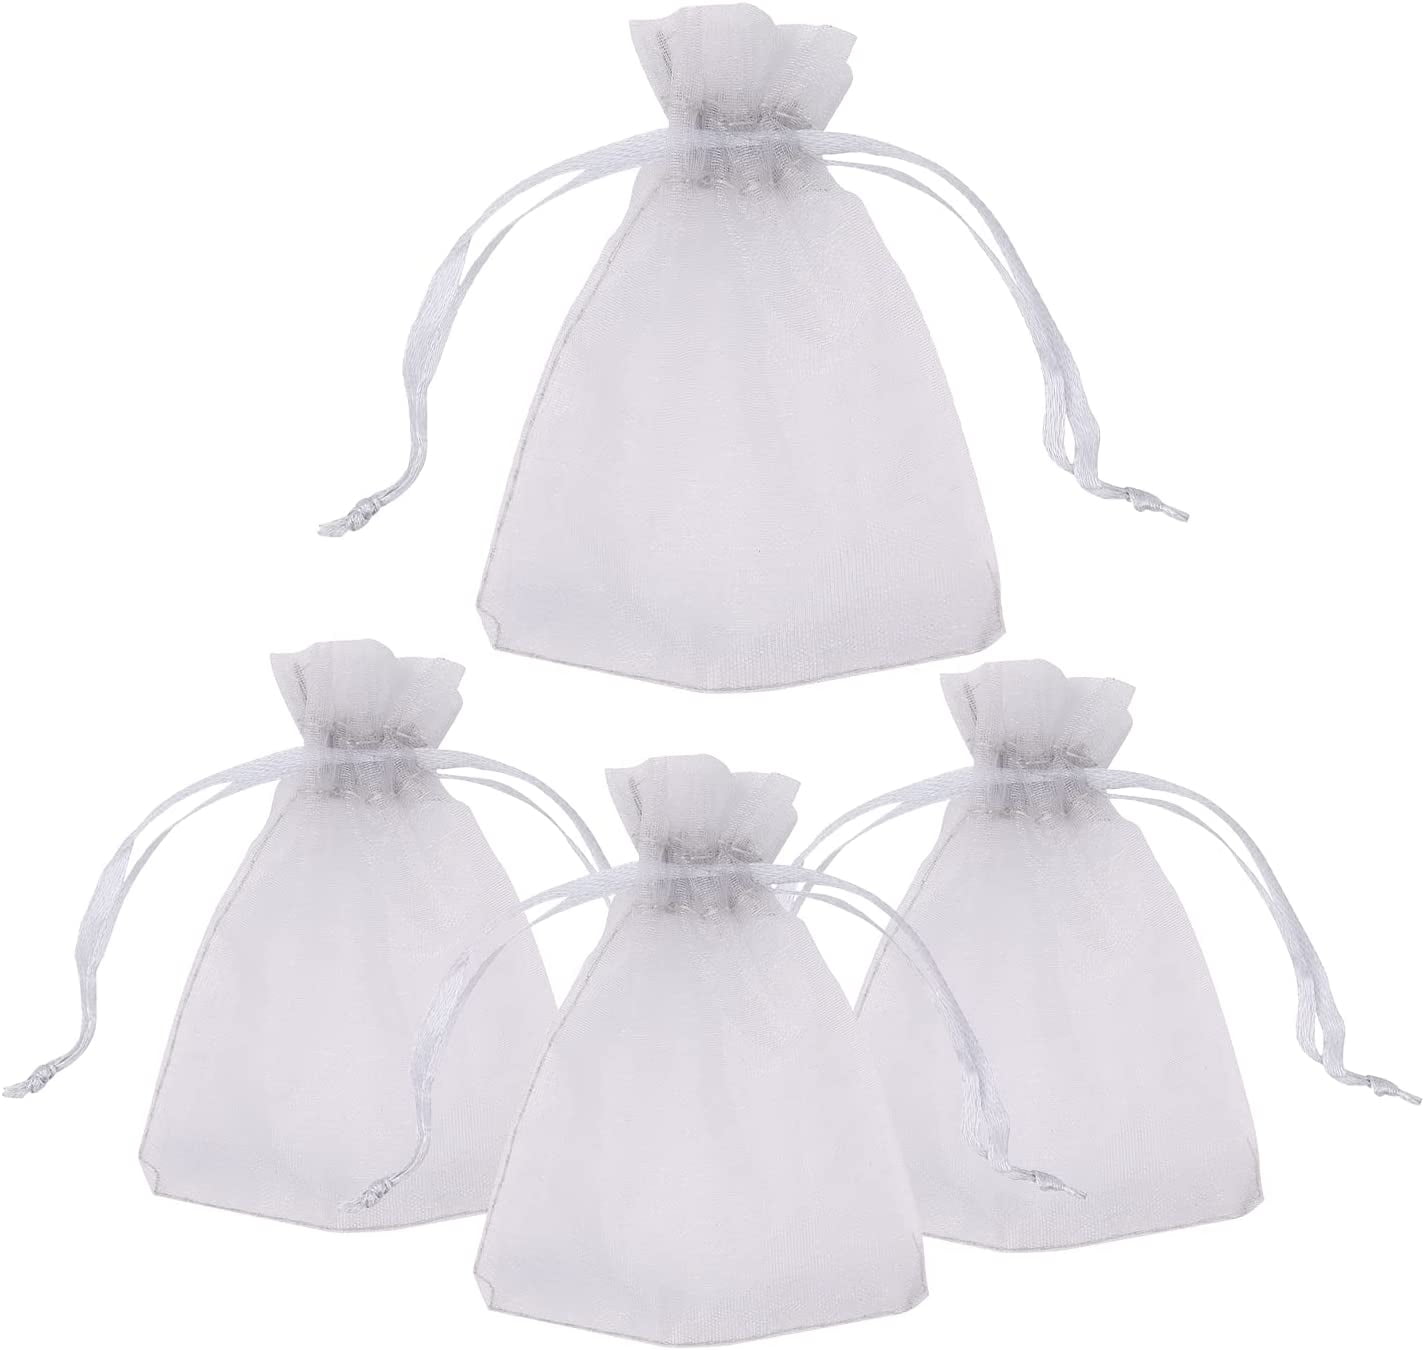 Trimming Shop Organza Bags Wedding Party Favor Gift Bags Sheer Bags 7cm x 9cm - Ivory - 100pcs, Size: 7x9cm, Beige